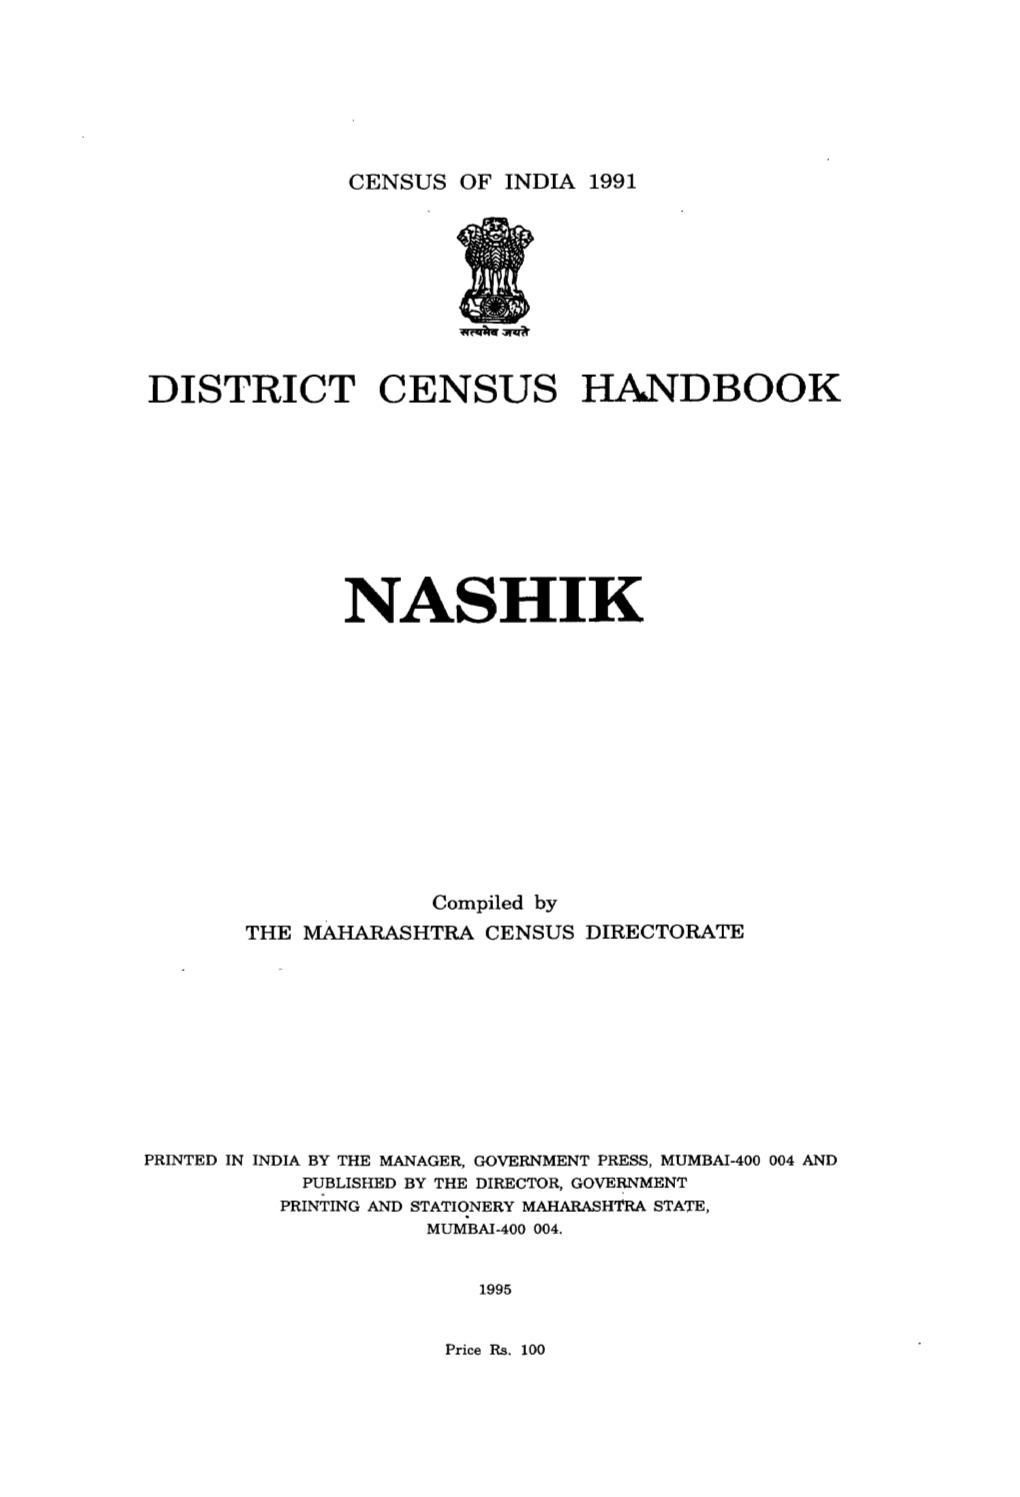 District Census Handbook, Nashik, Part XII-A & B, Series-14